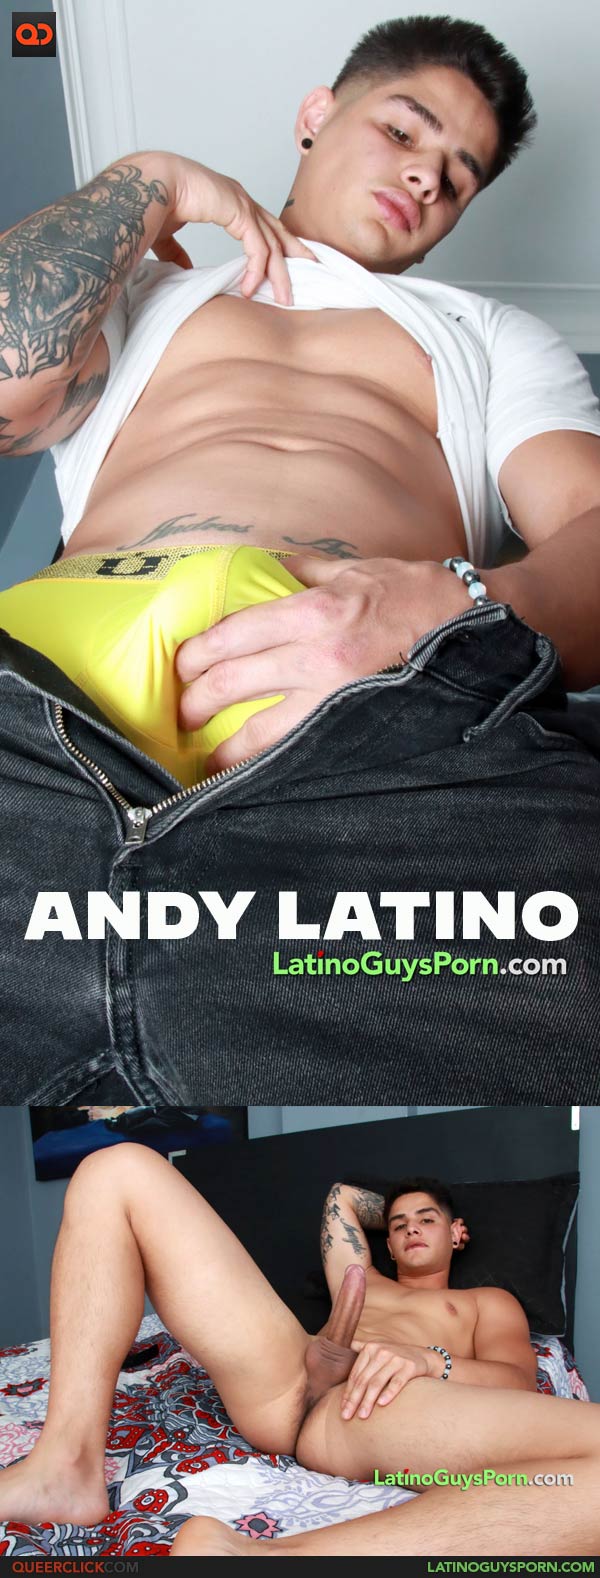 Latino Guys Porn: Andy Latino